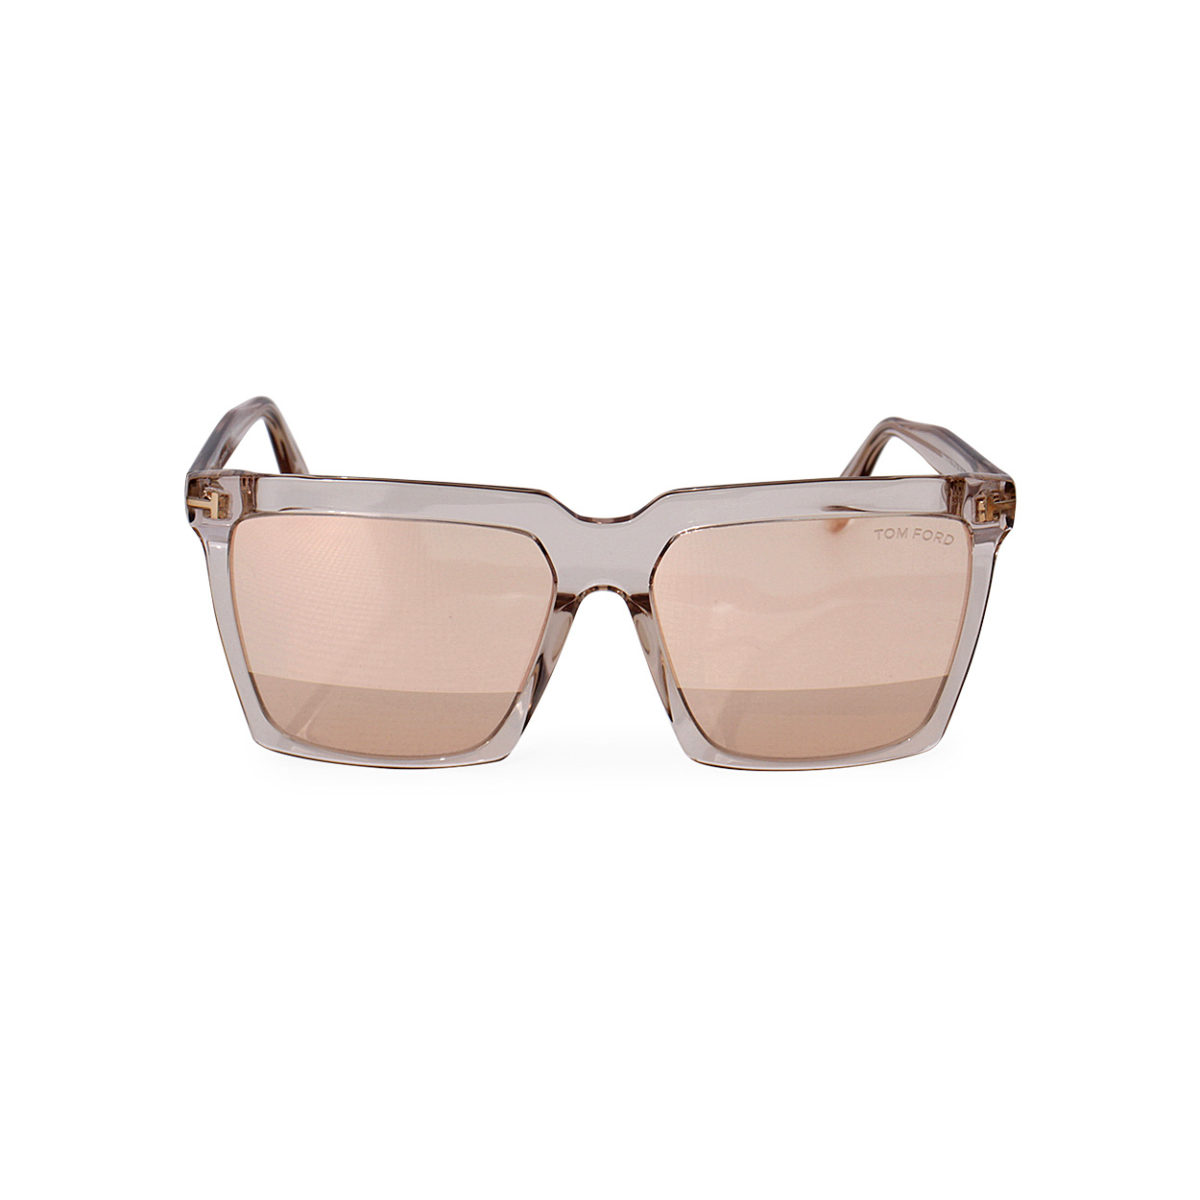 TOM FORD Sabrina 02 Sunglasses TF764 Transparent - NEW | Luxity